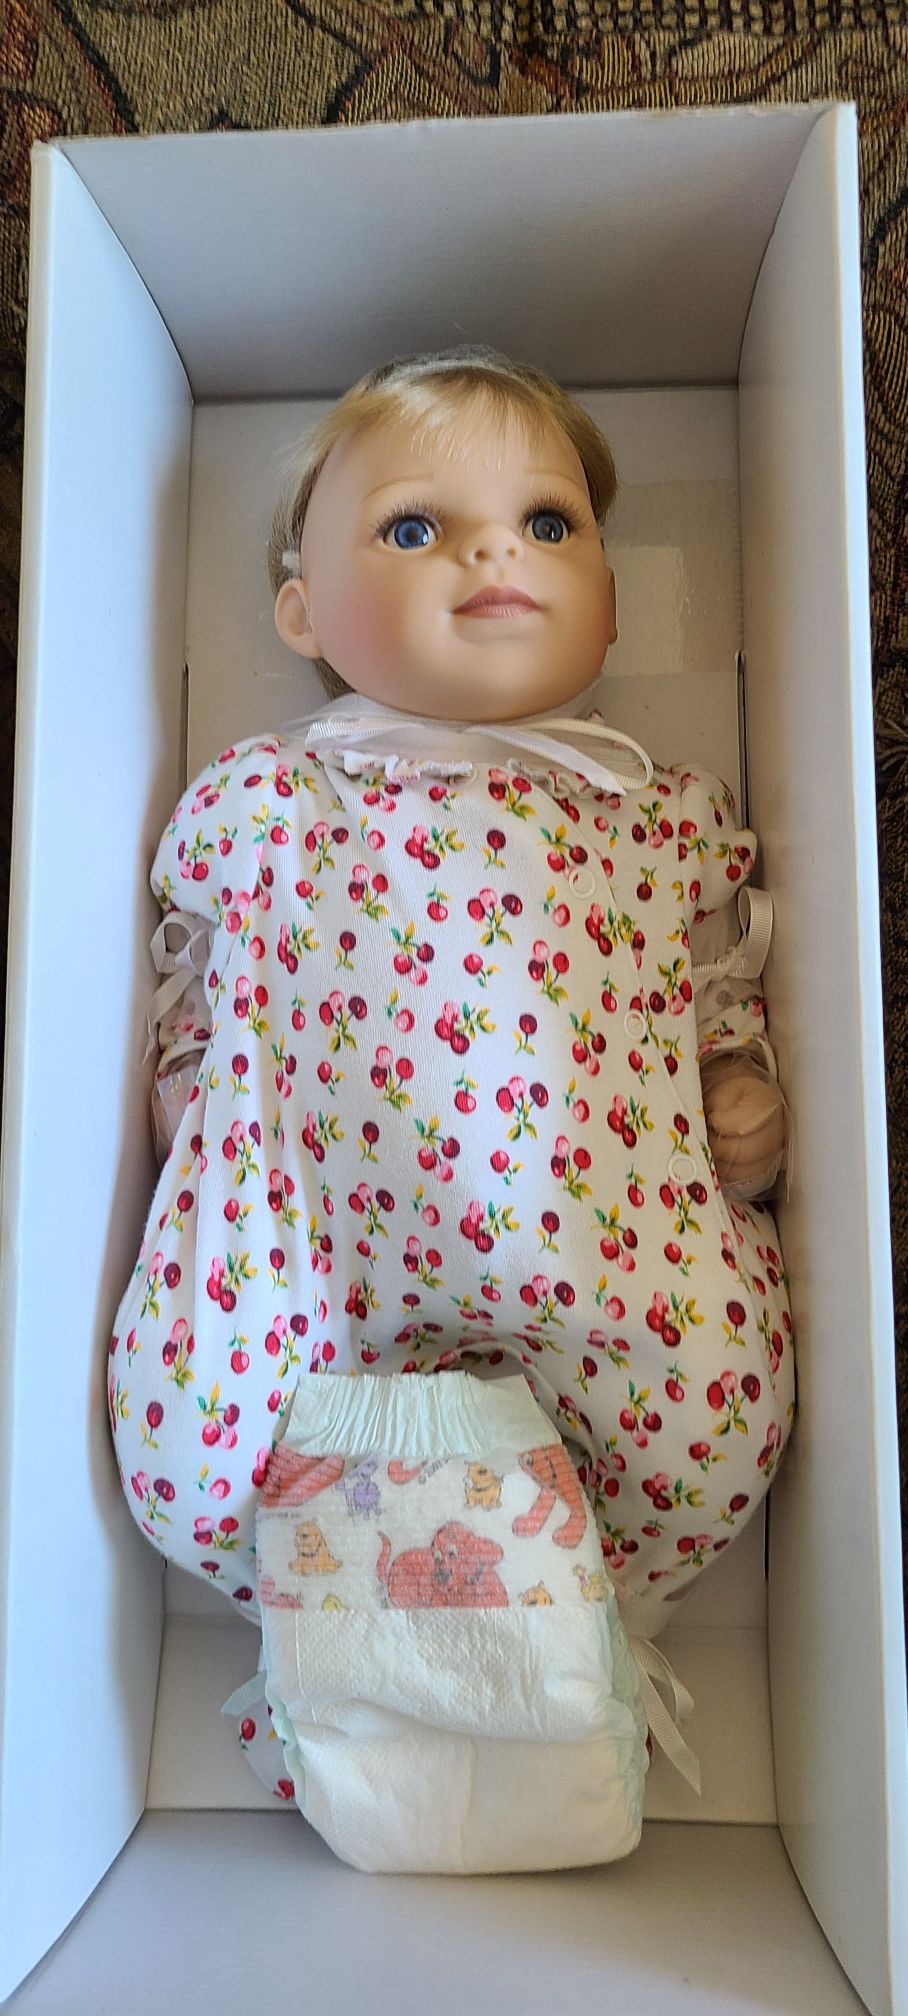 Life like baby doll still new in box